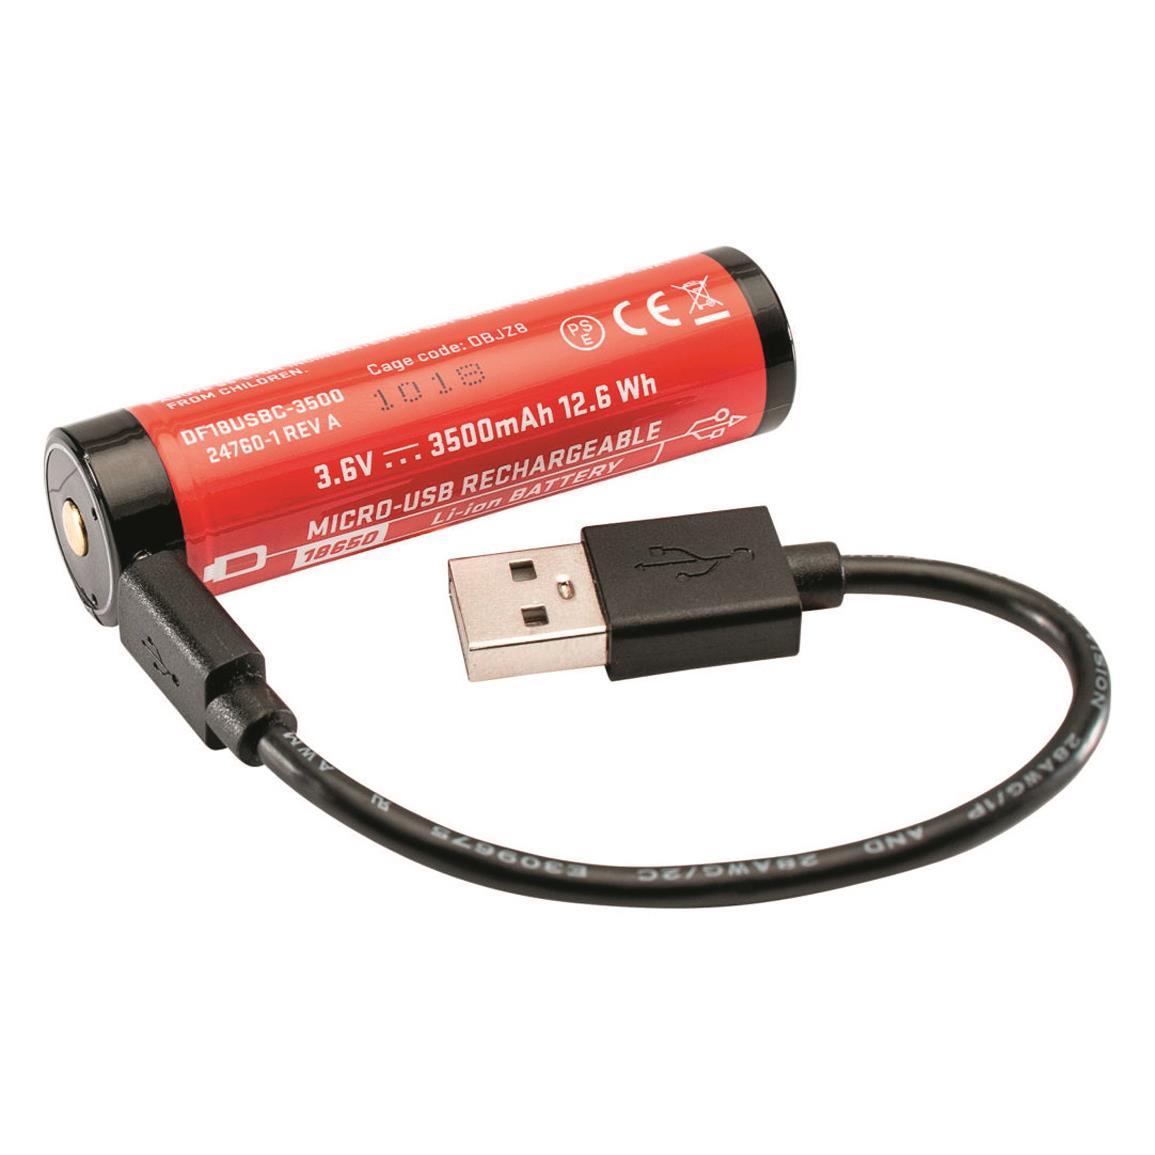 MICRO-USB charging port